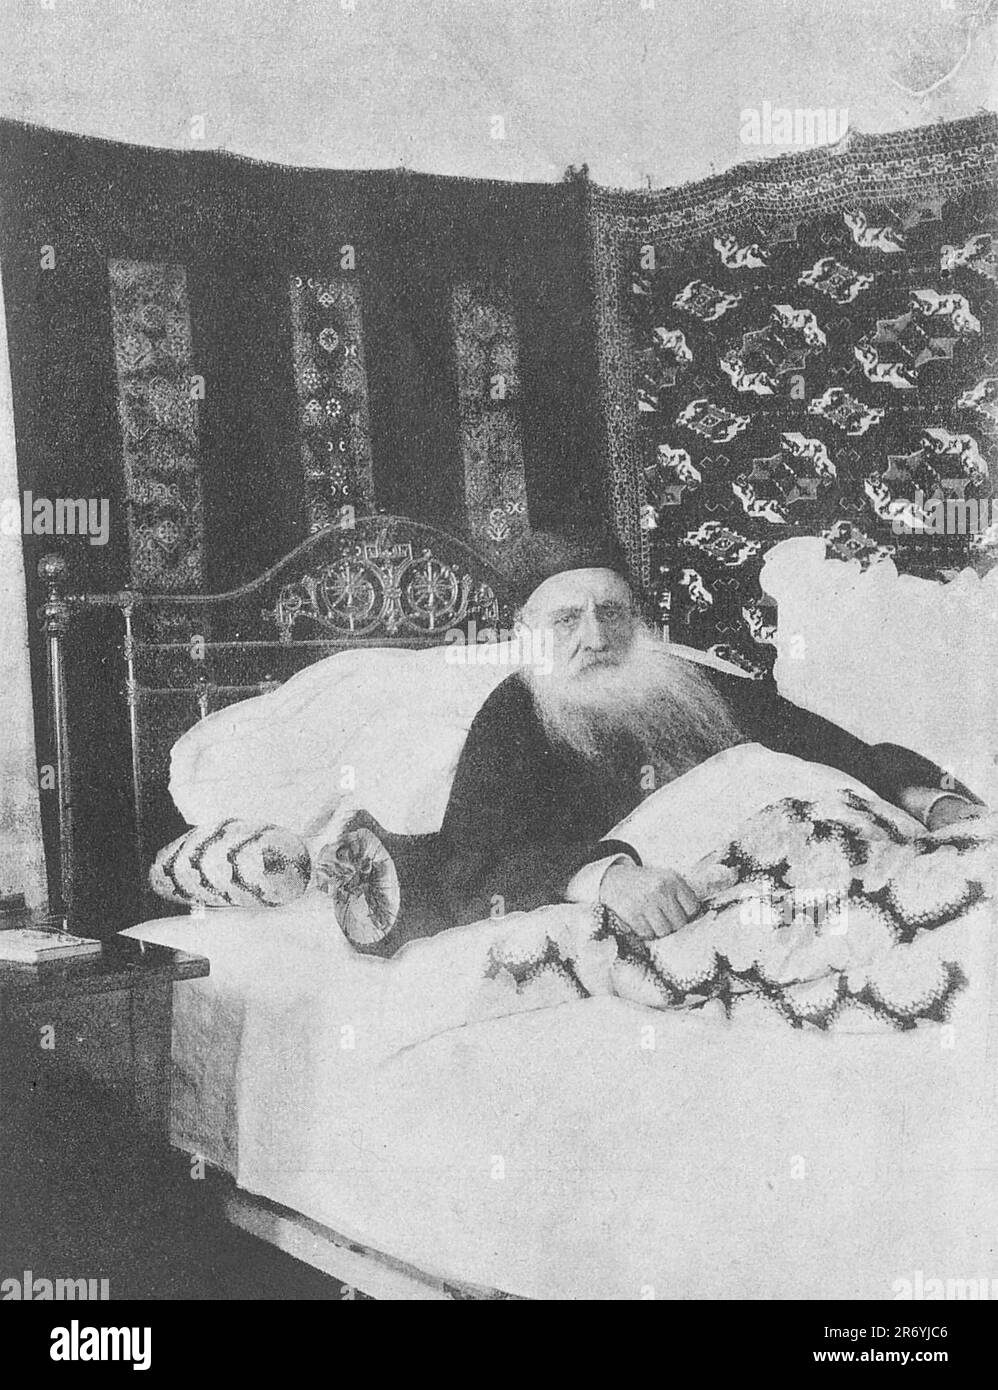 The last portrait of Patriarch Matthew II Izmirlian a few days before his death. Photo taken in 1910. Stock Photo